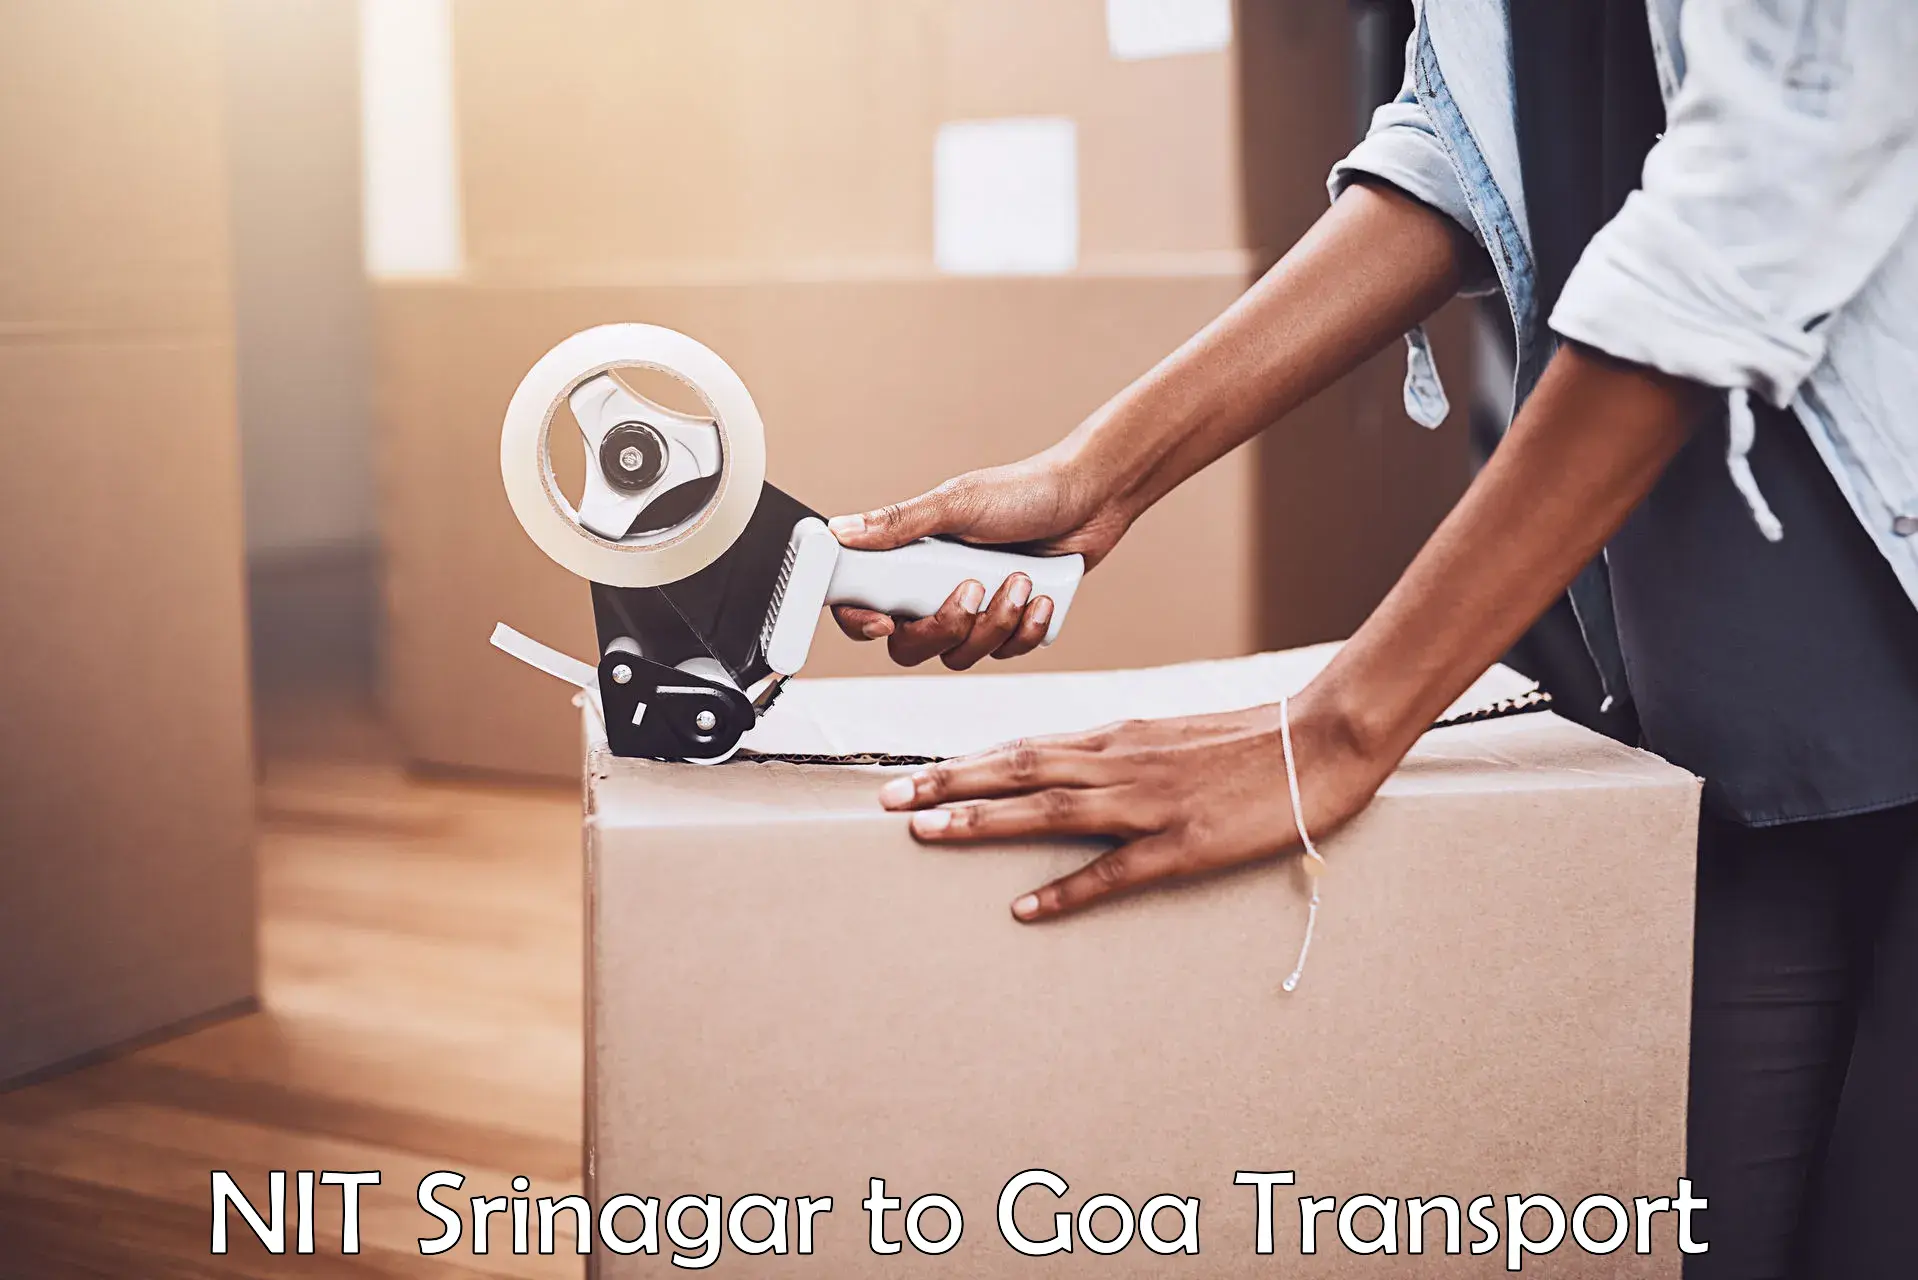 Container transport service NIT Srinagar to Goa